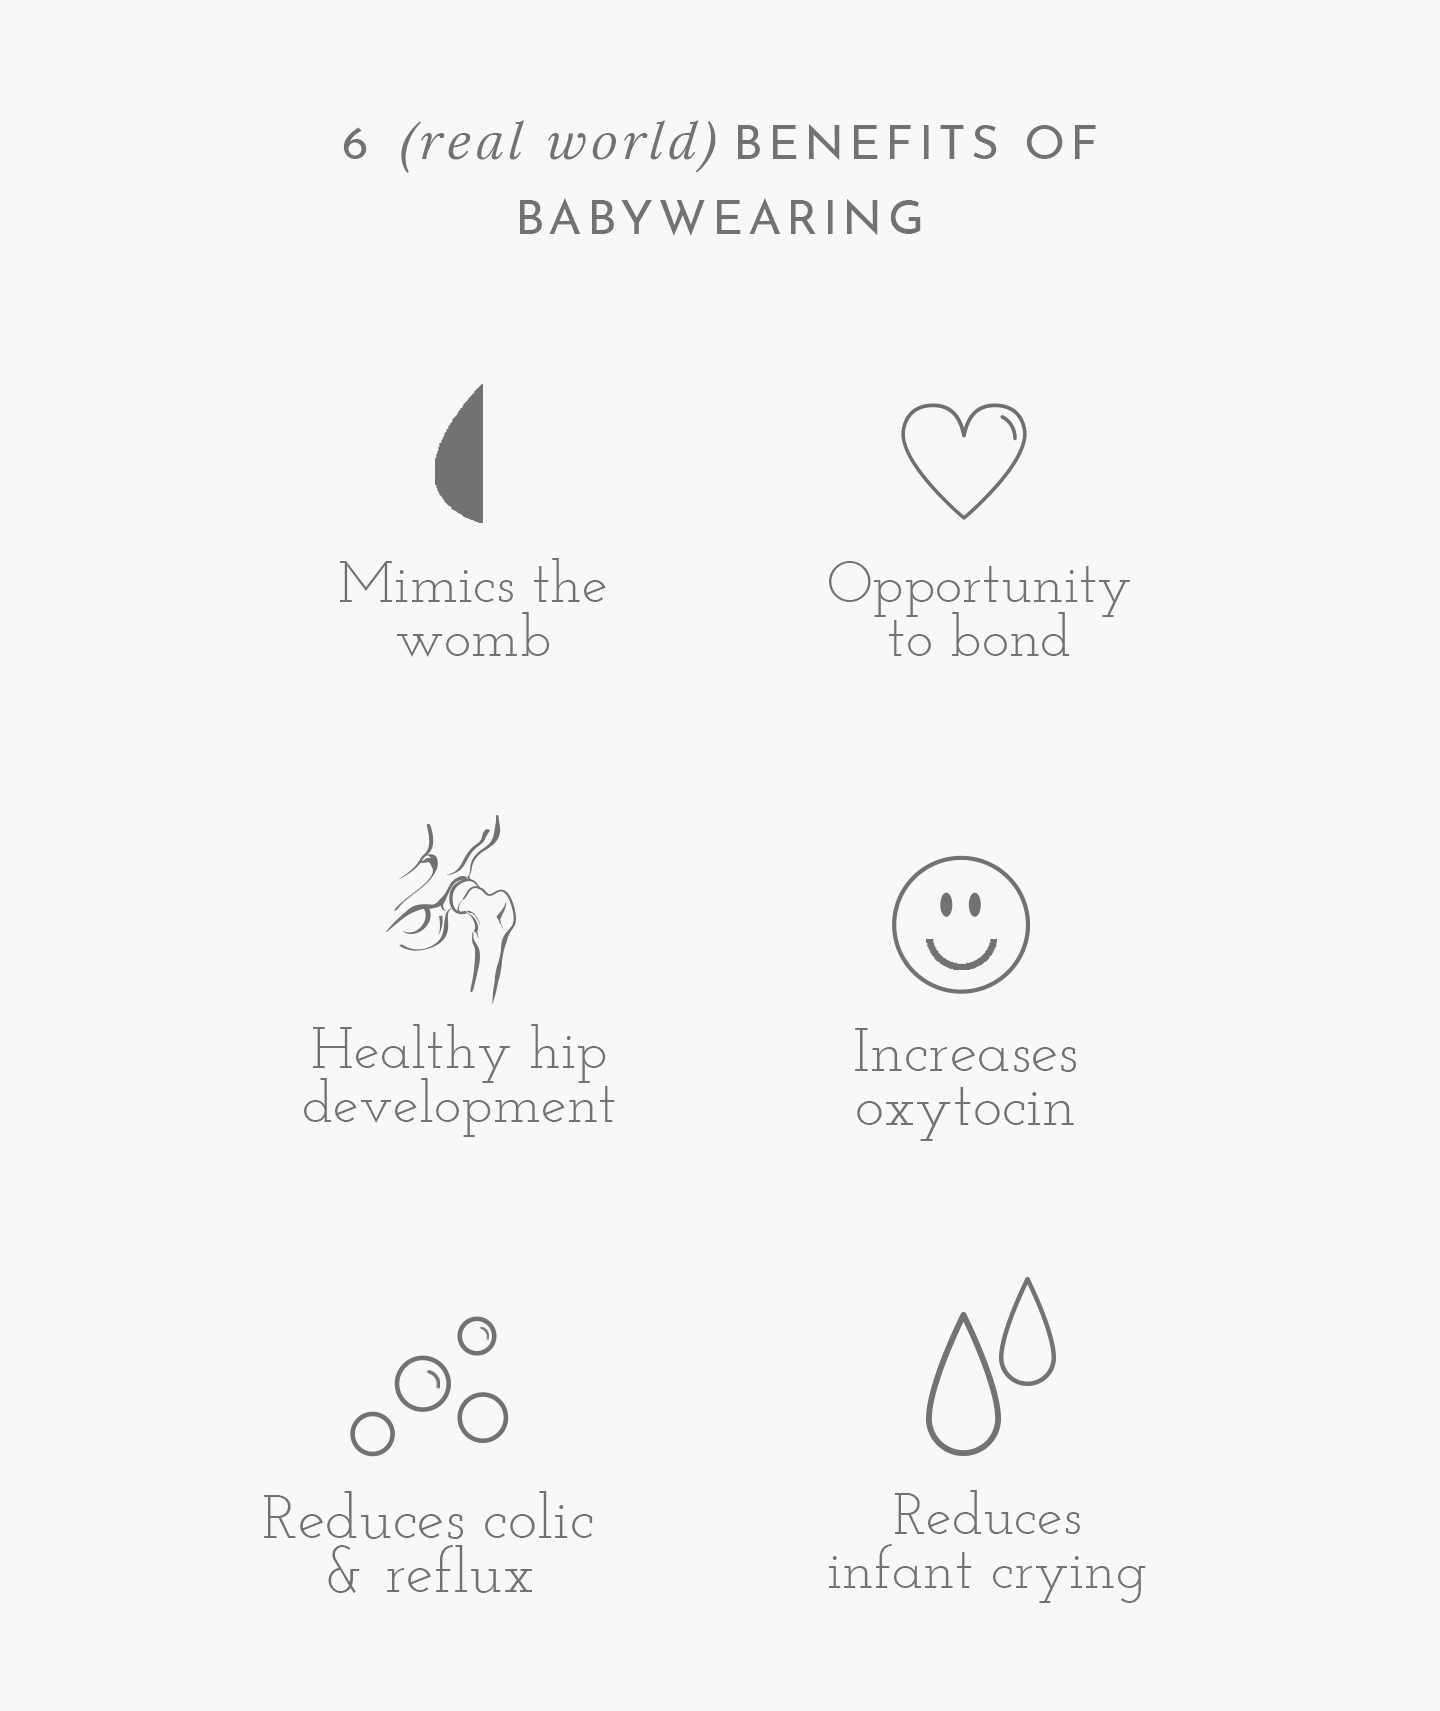 Benefits of Babywearing